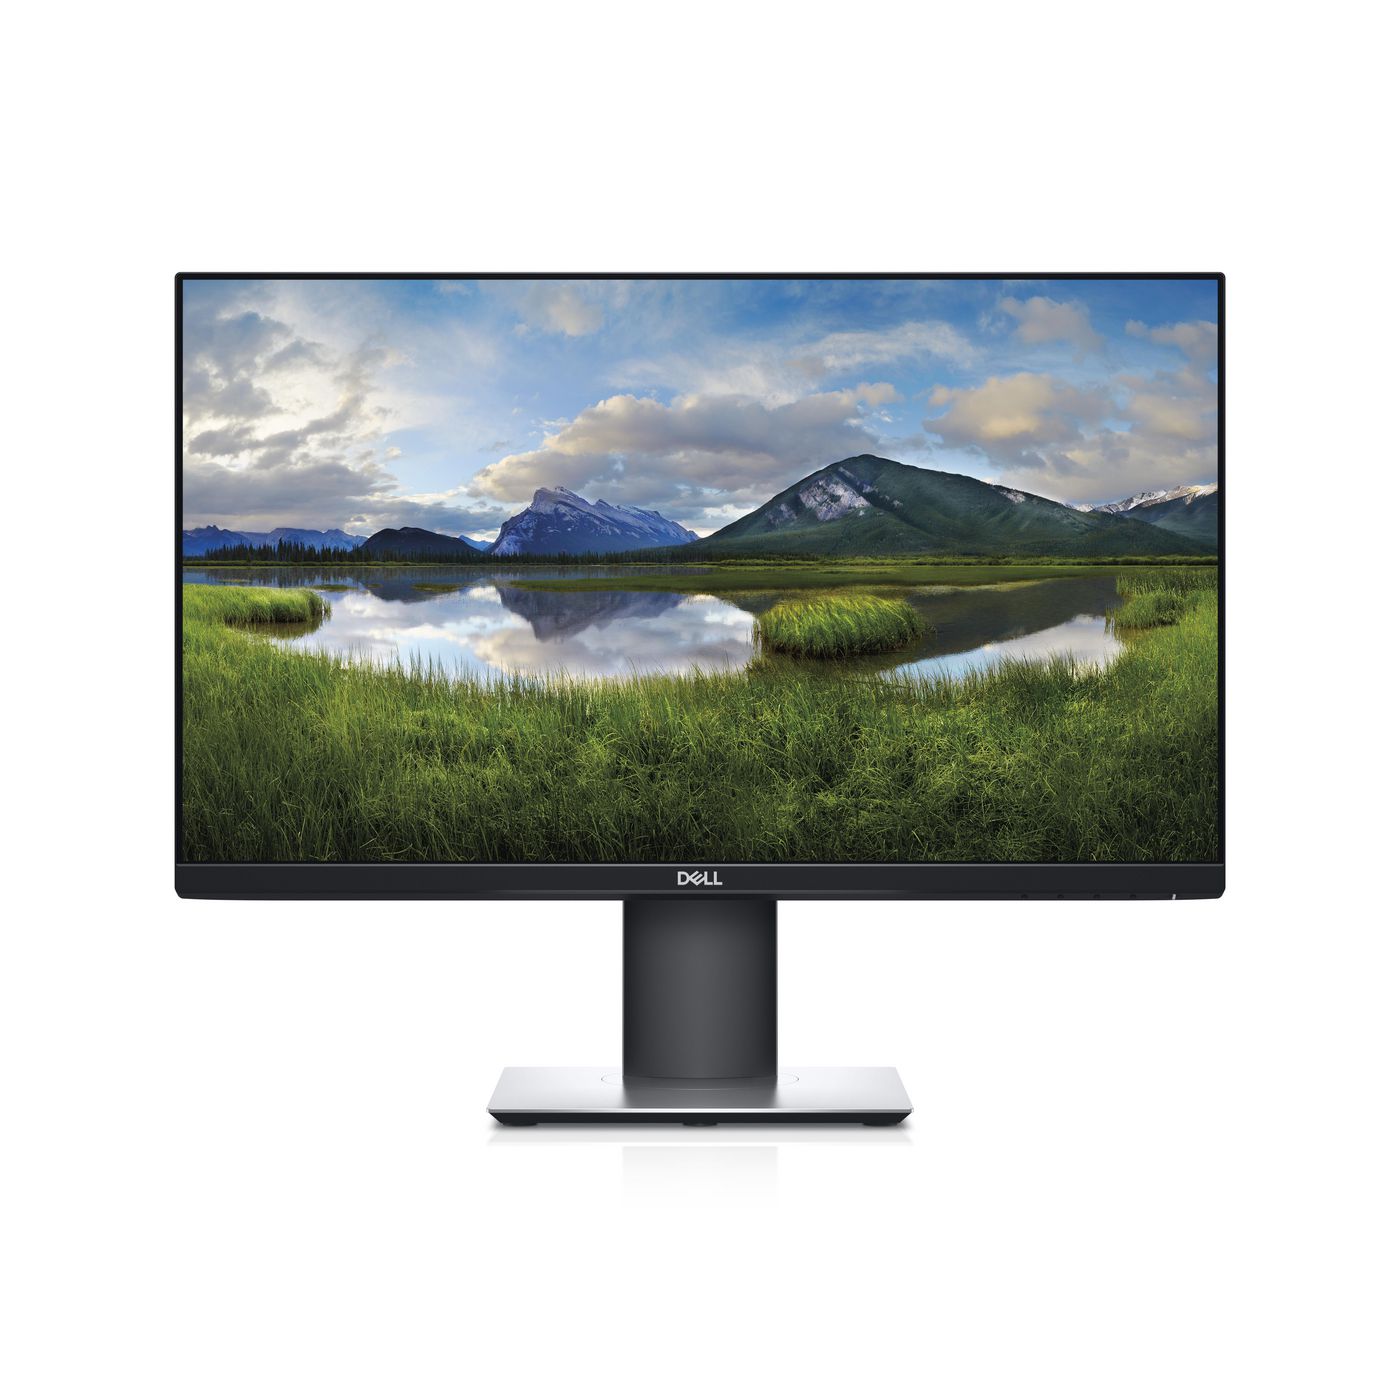 Desktop Monitor - P2319h - 23in - 1920x1080 (full Hd) - Black